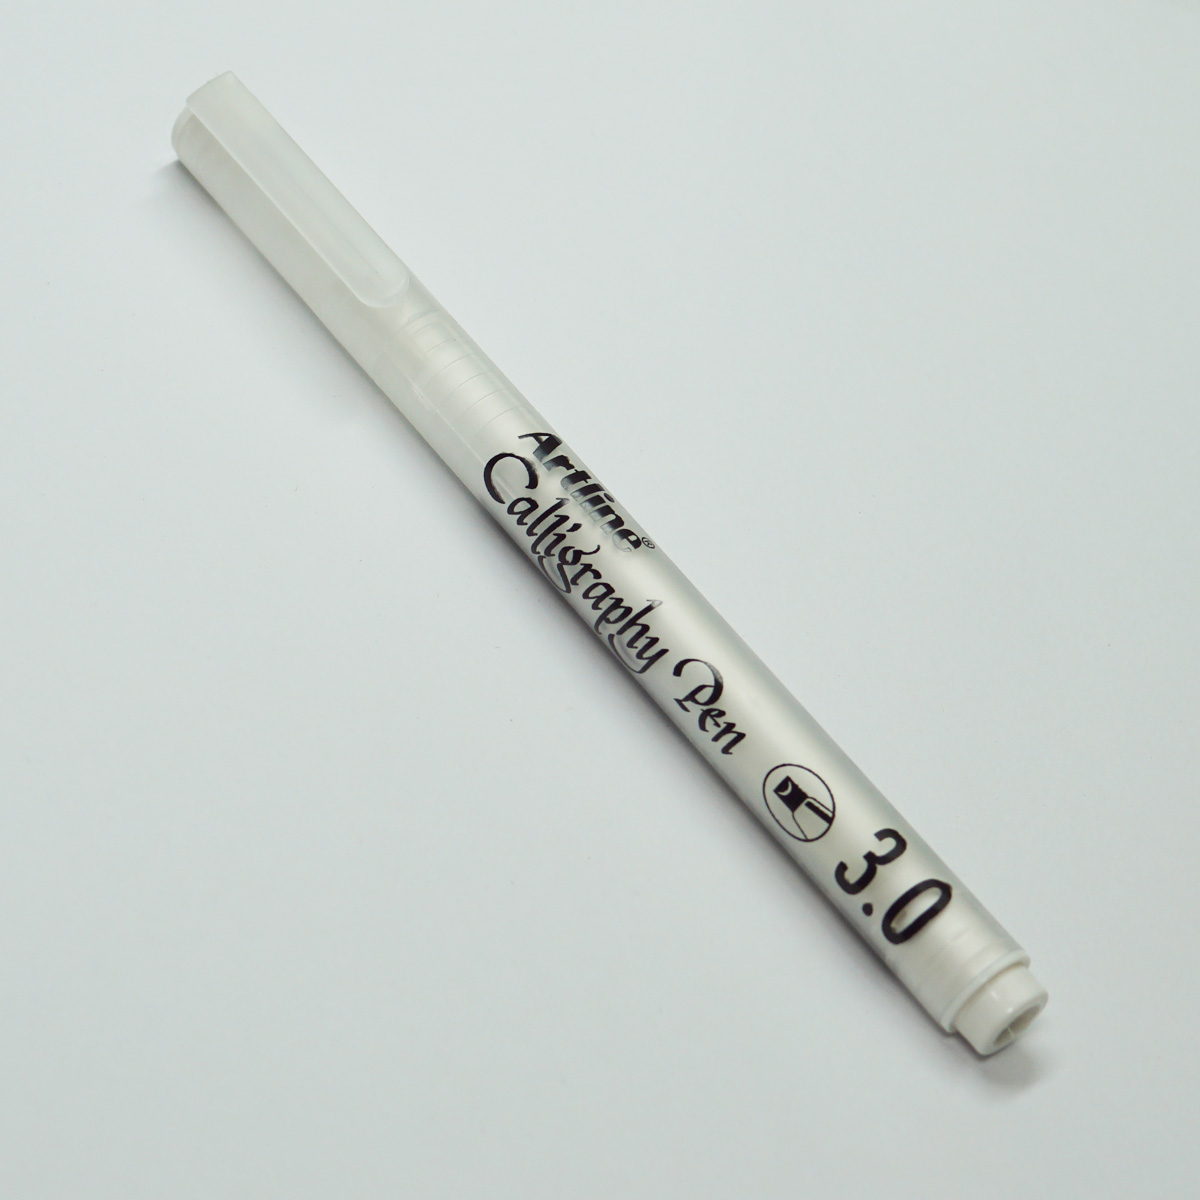 Artline White Color Transparent Body With Cap 3.0 Tip Calligraphy Pen SKU 22623